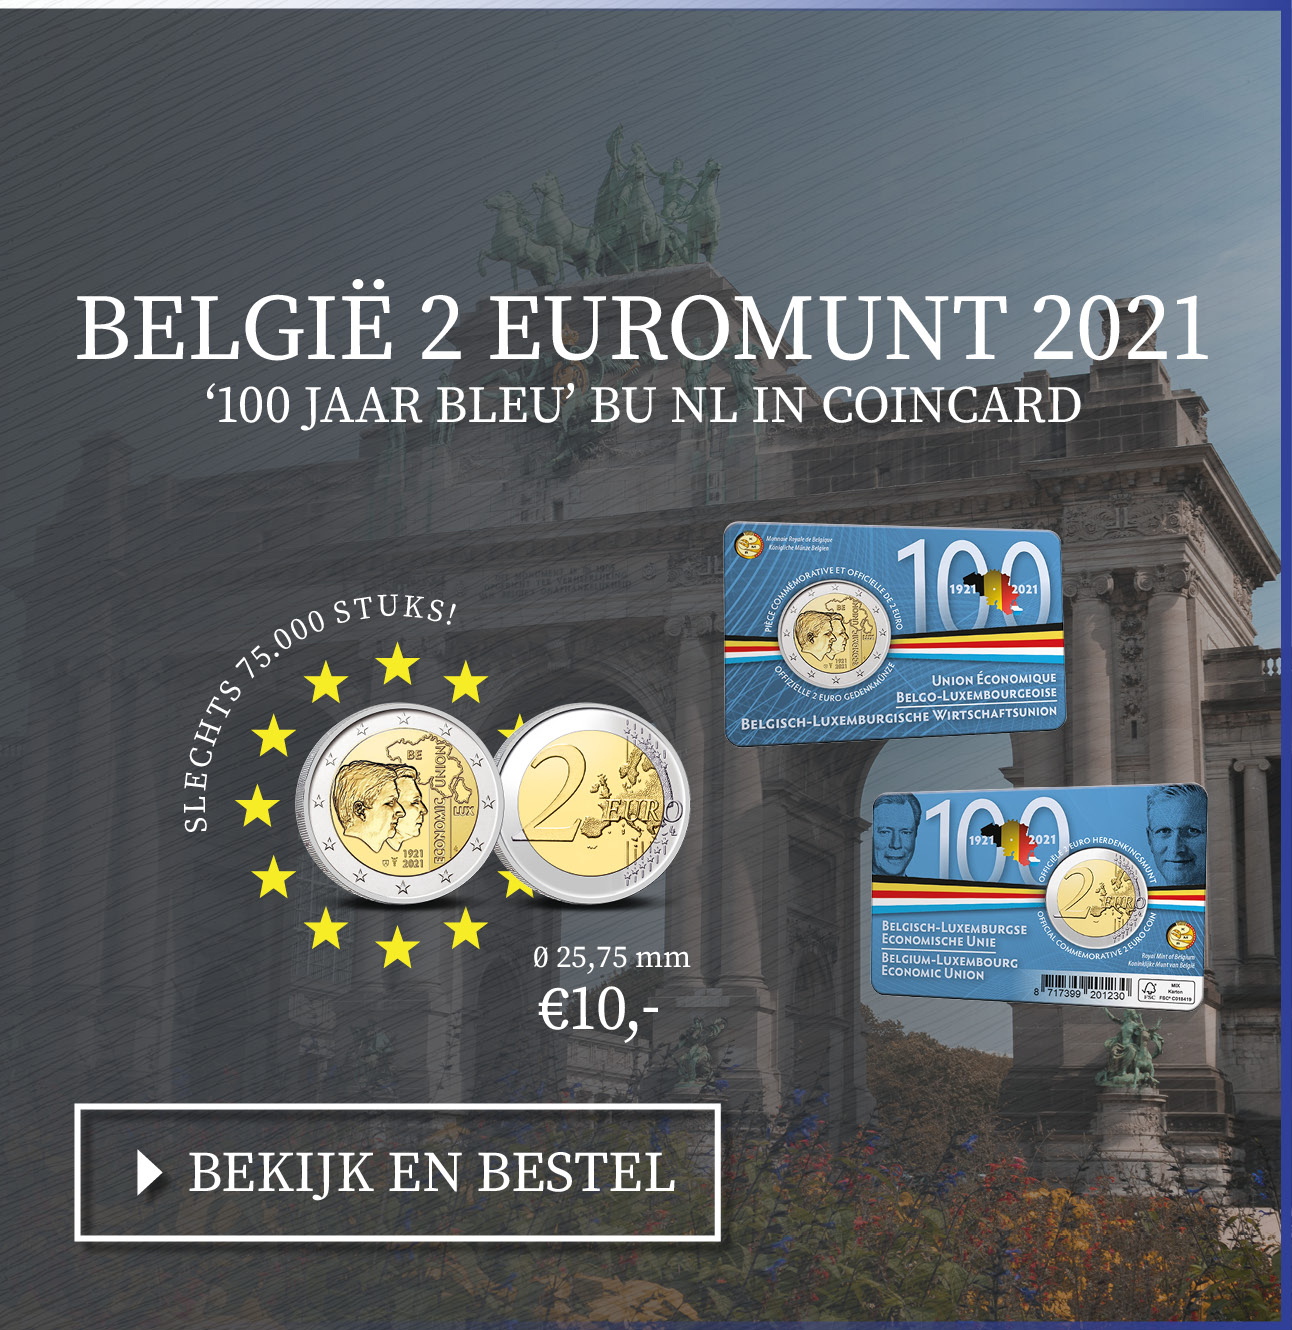 Bekijk en bestel: België 2 euromunt 2021 ‘100 jaar BLEU’ BU in coincard NL